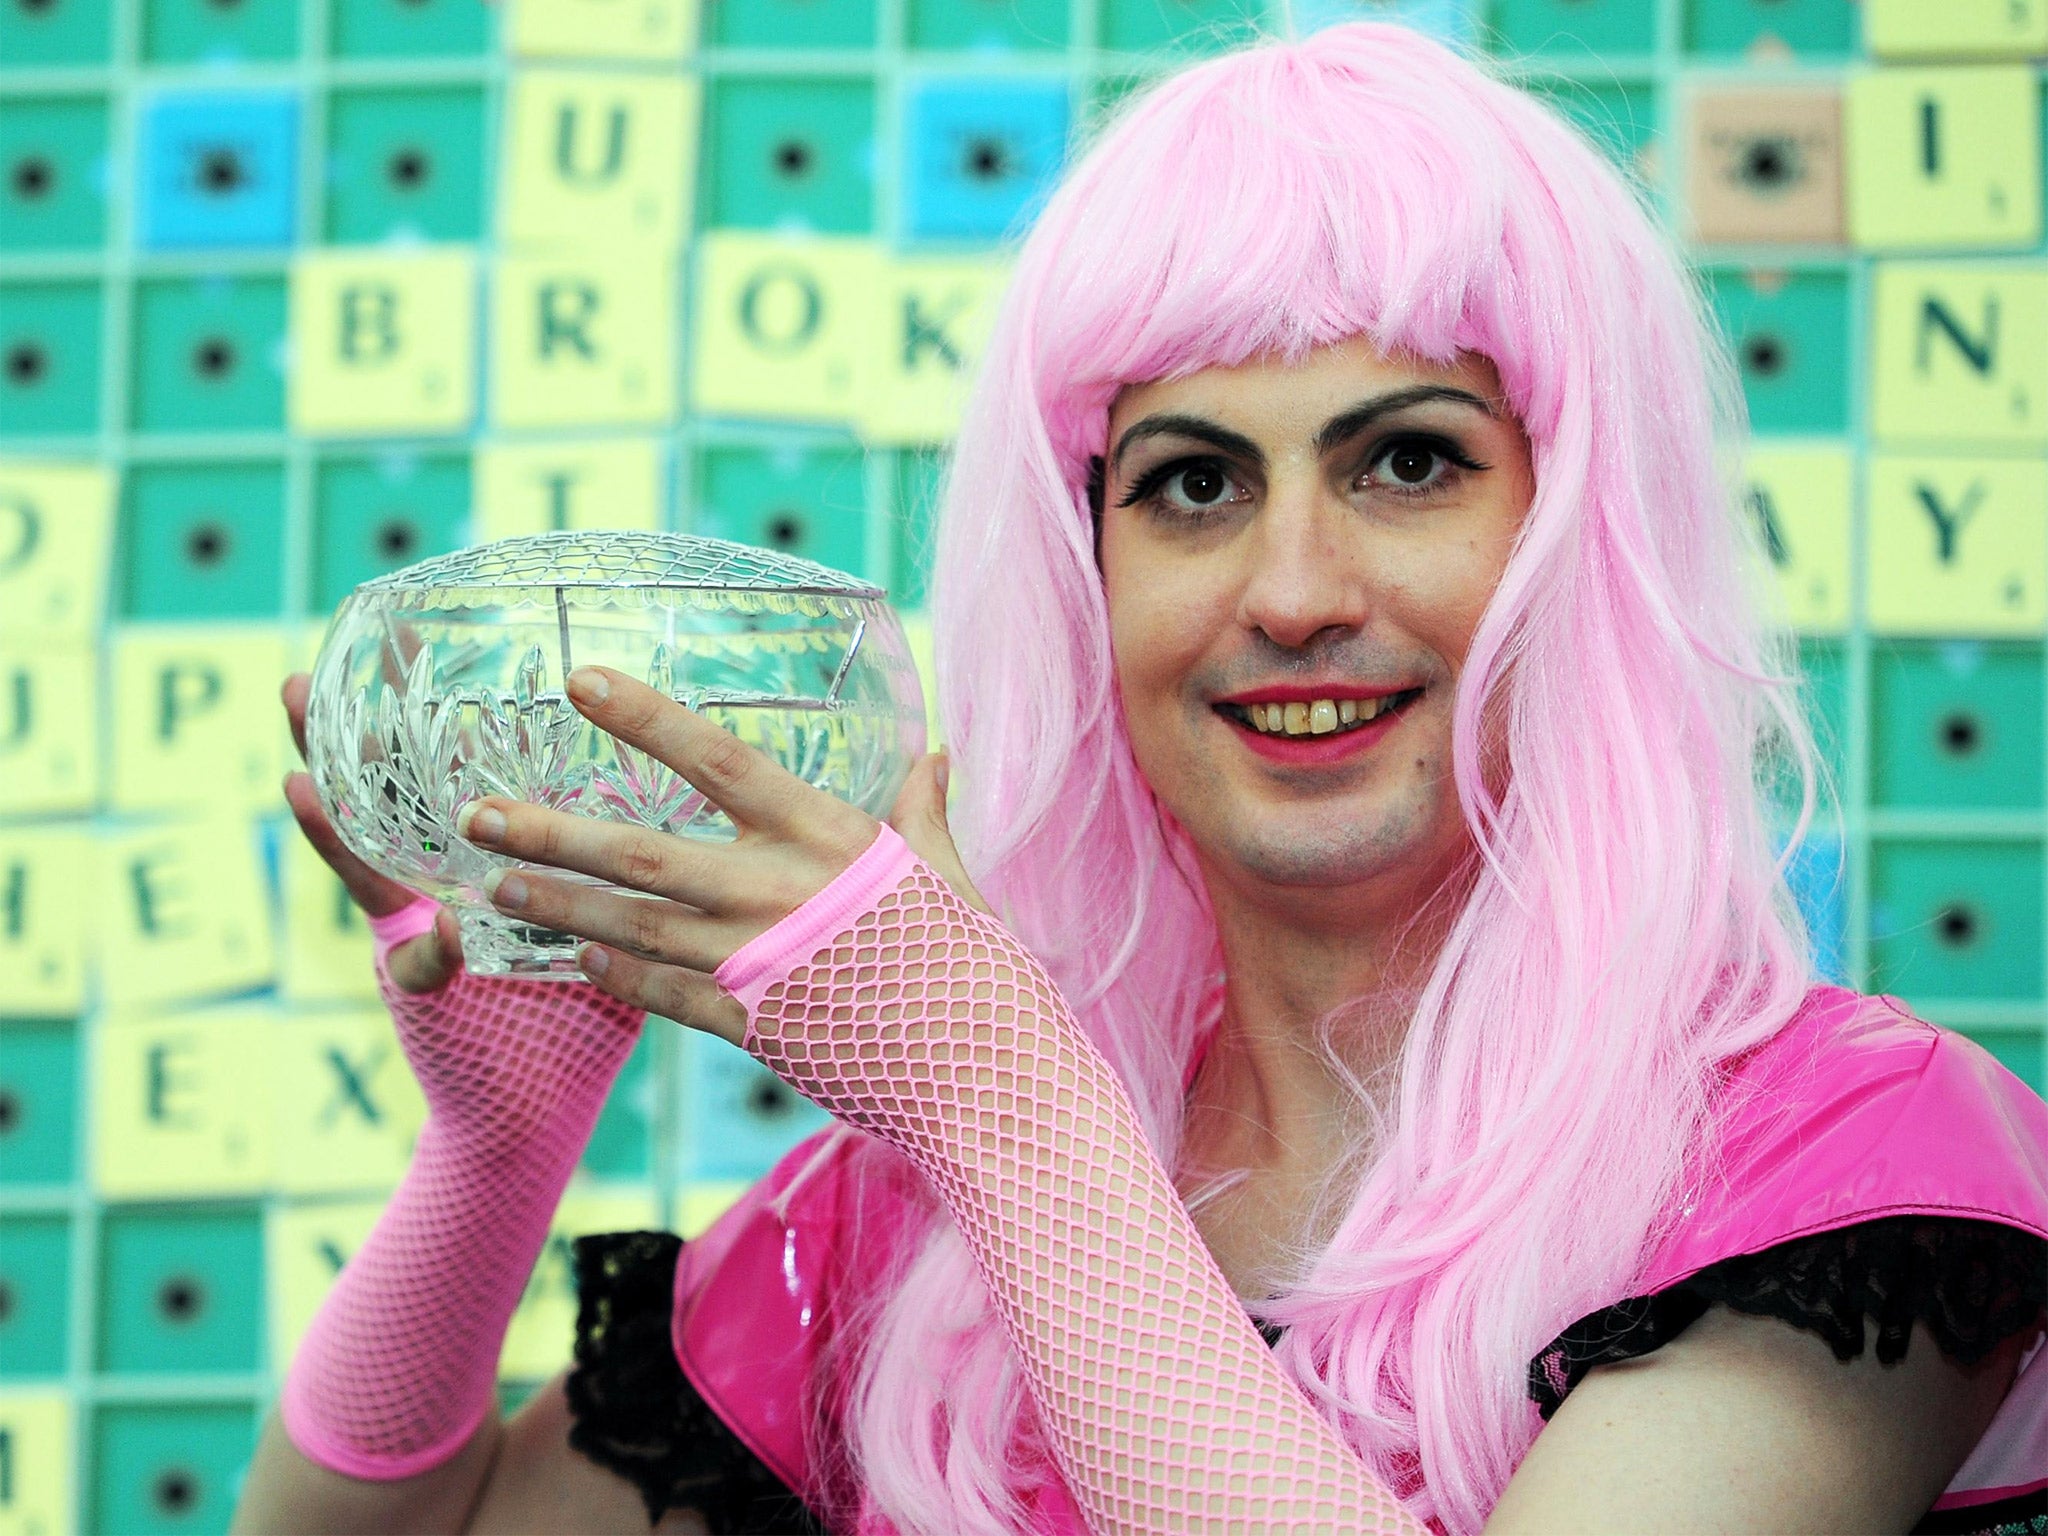 Mikki Nicholson won the 2010 National Scrabble Championship